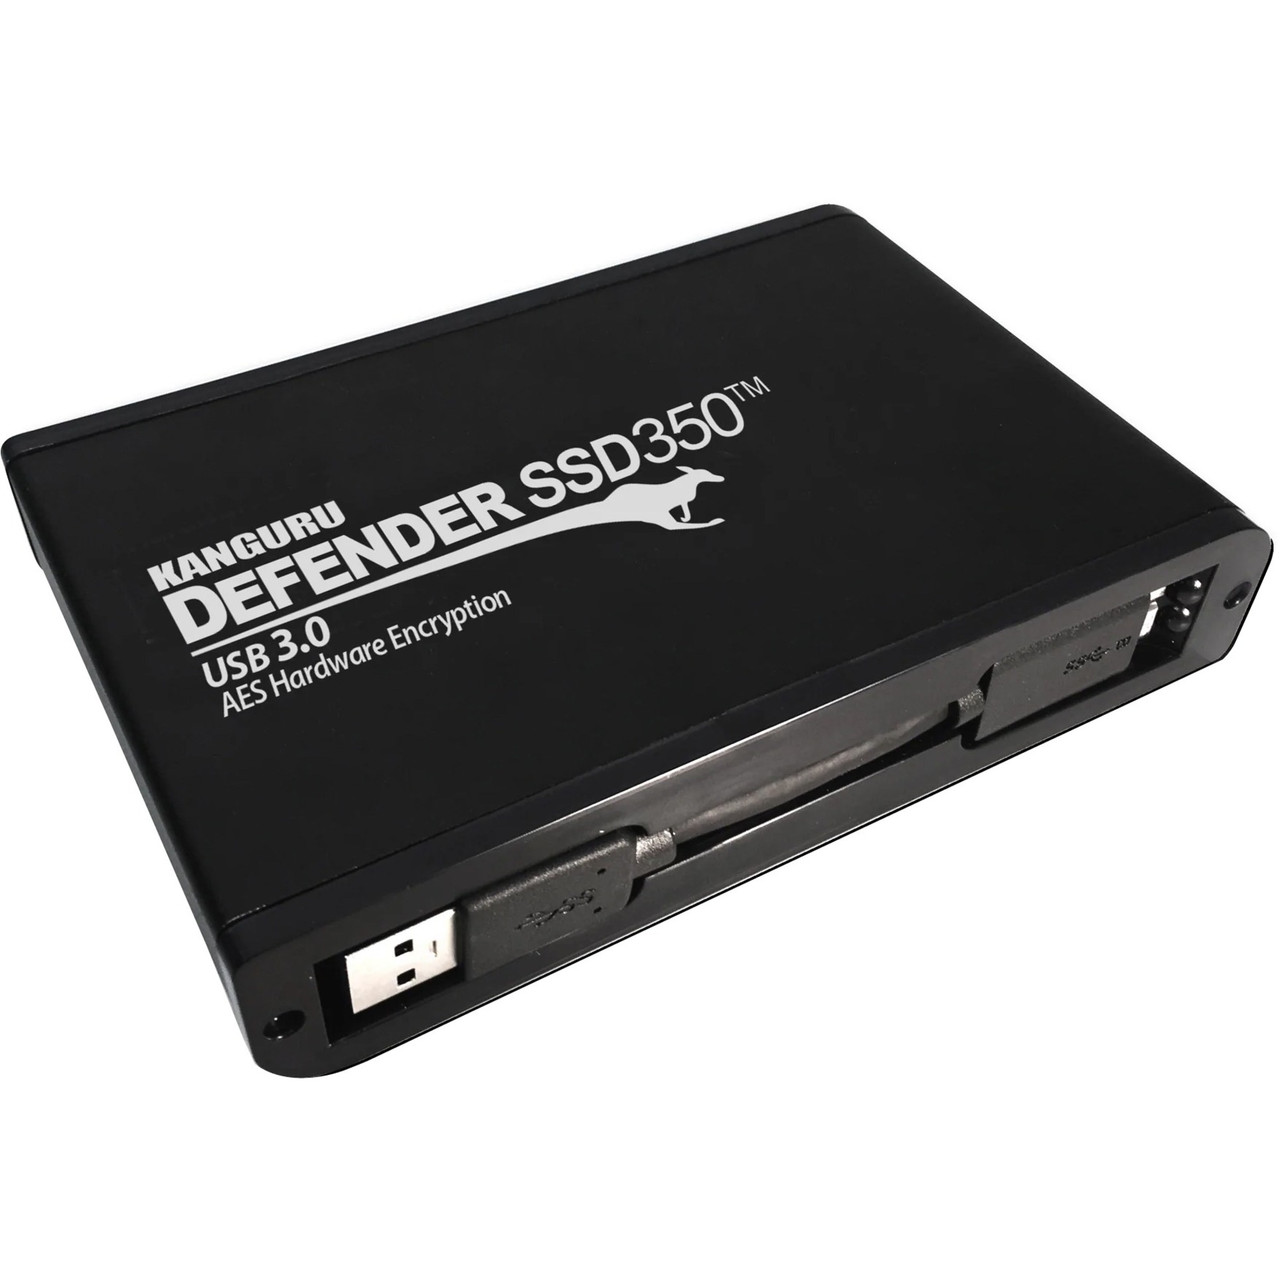 Kanguru Defender SSD350 1 TB FIPS 140-2 Certified - Hardware Encrypted Solid State Drive - 2.5" External - SATA (SATA/600) - Matte Black - TAA Compliant - KDH3B-350F-1TSSD